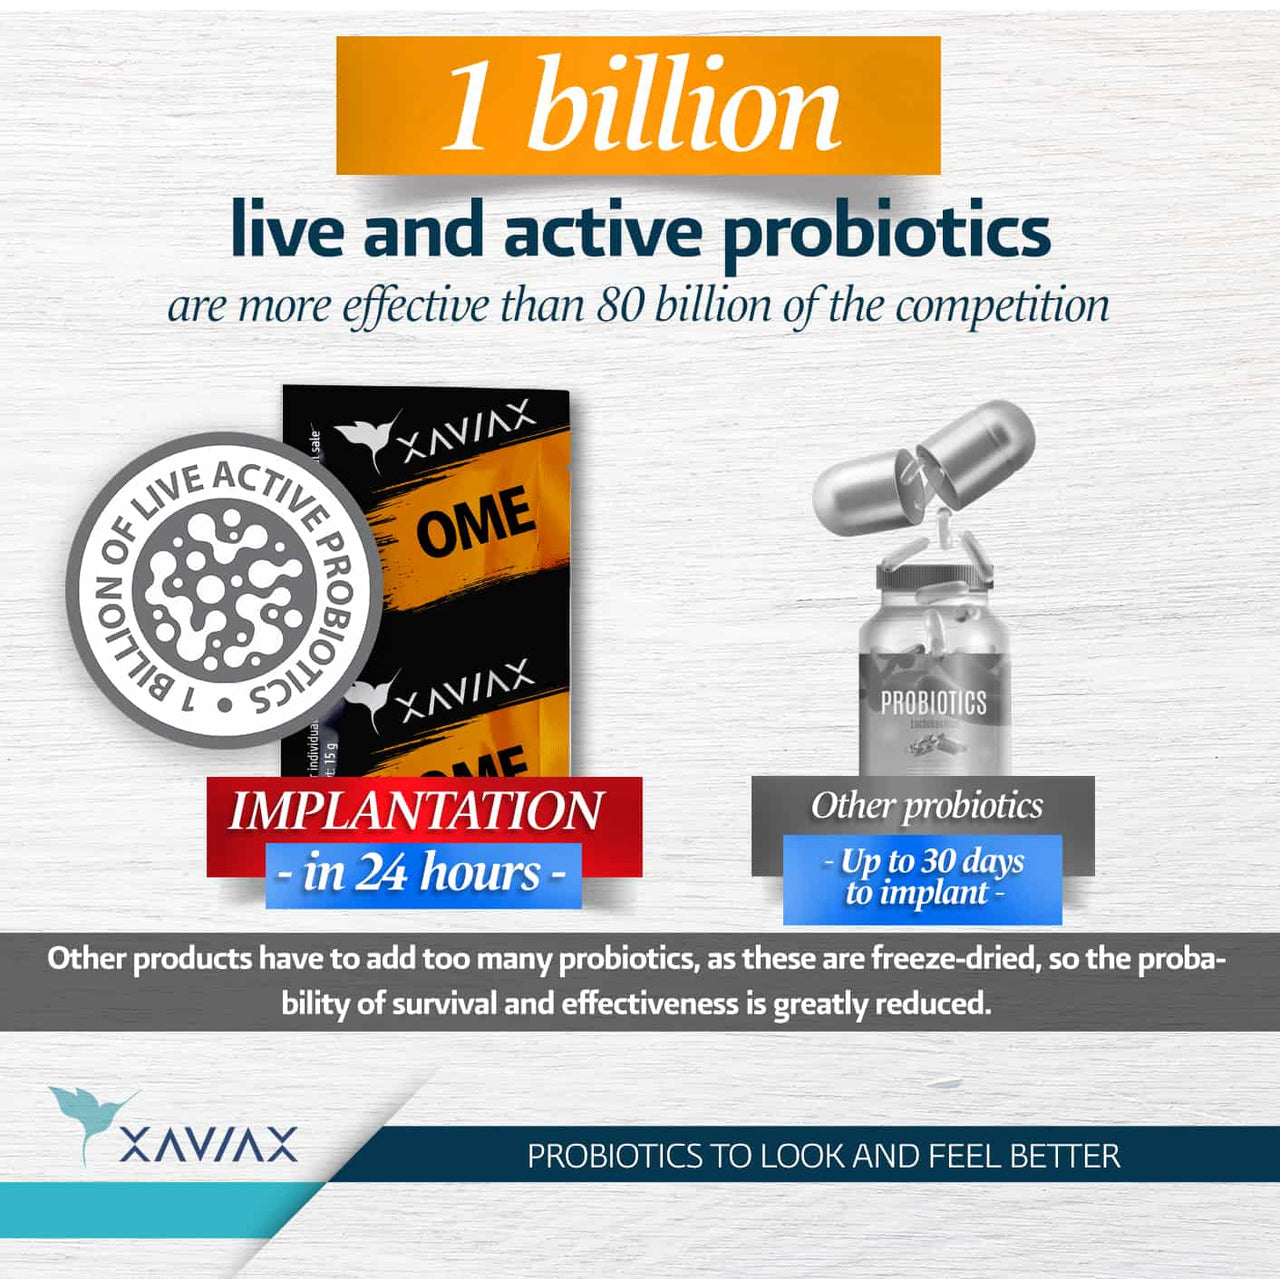 OME has 1 billion live and active probiotics